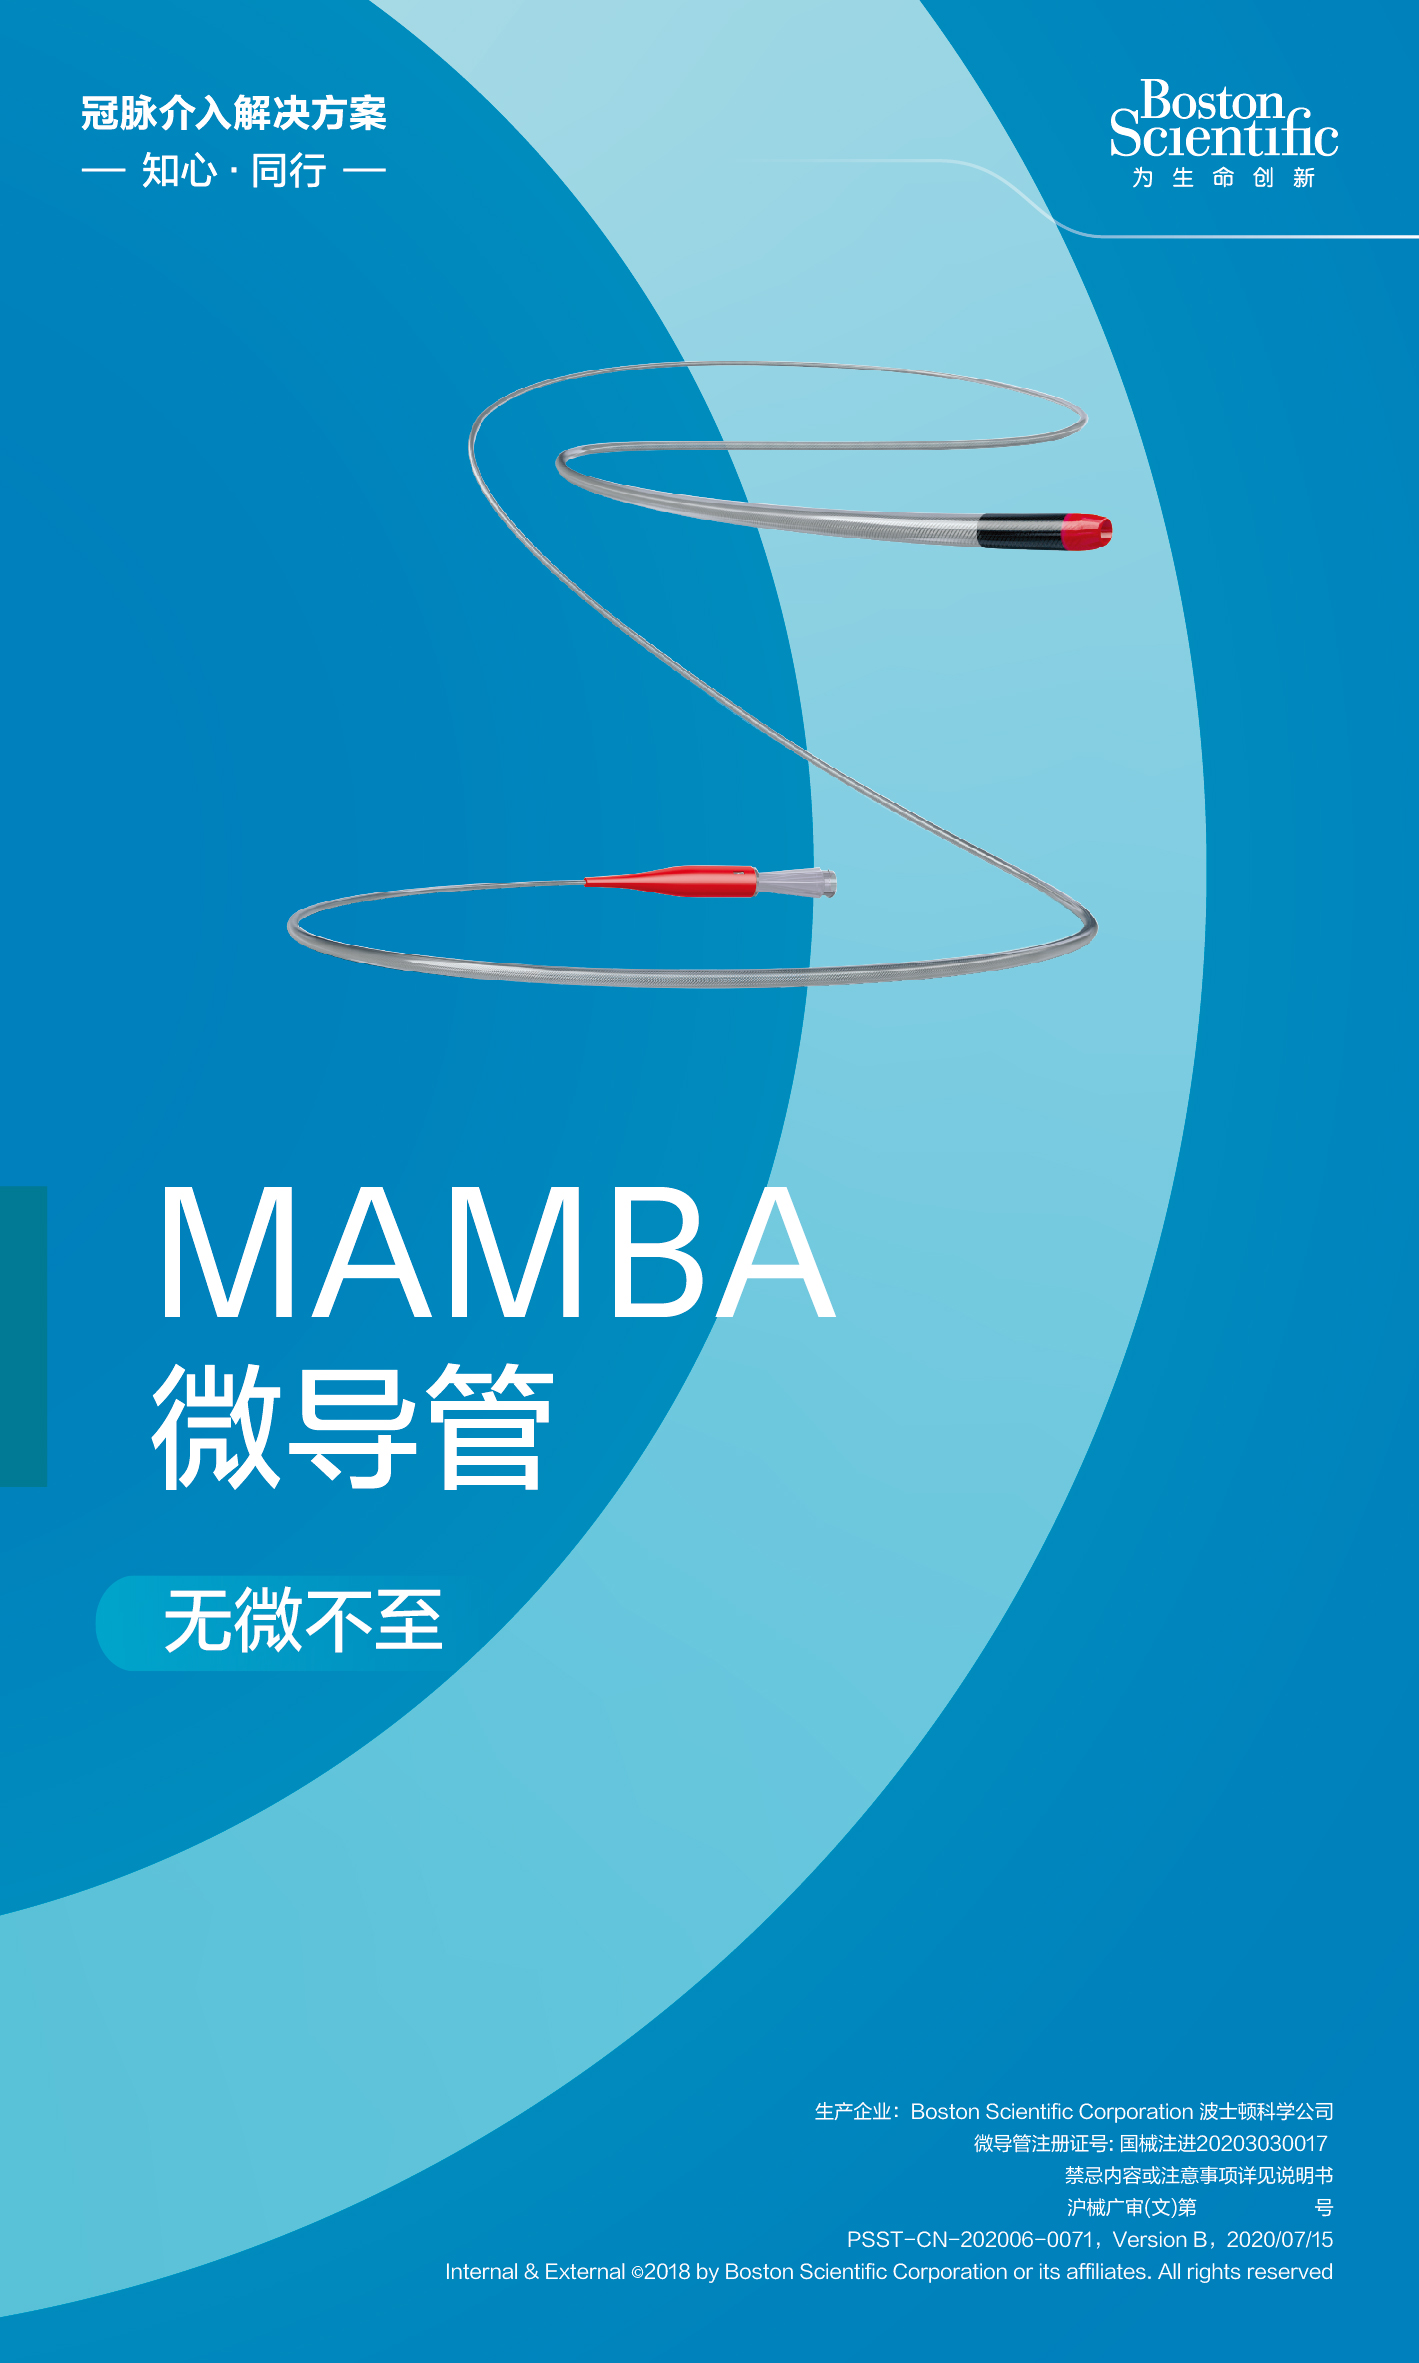 5.MAMBA 微导管 .jpg